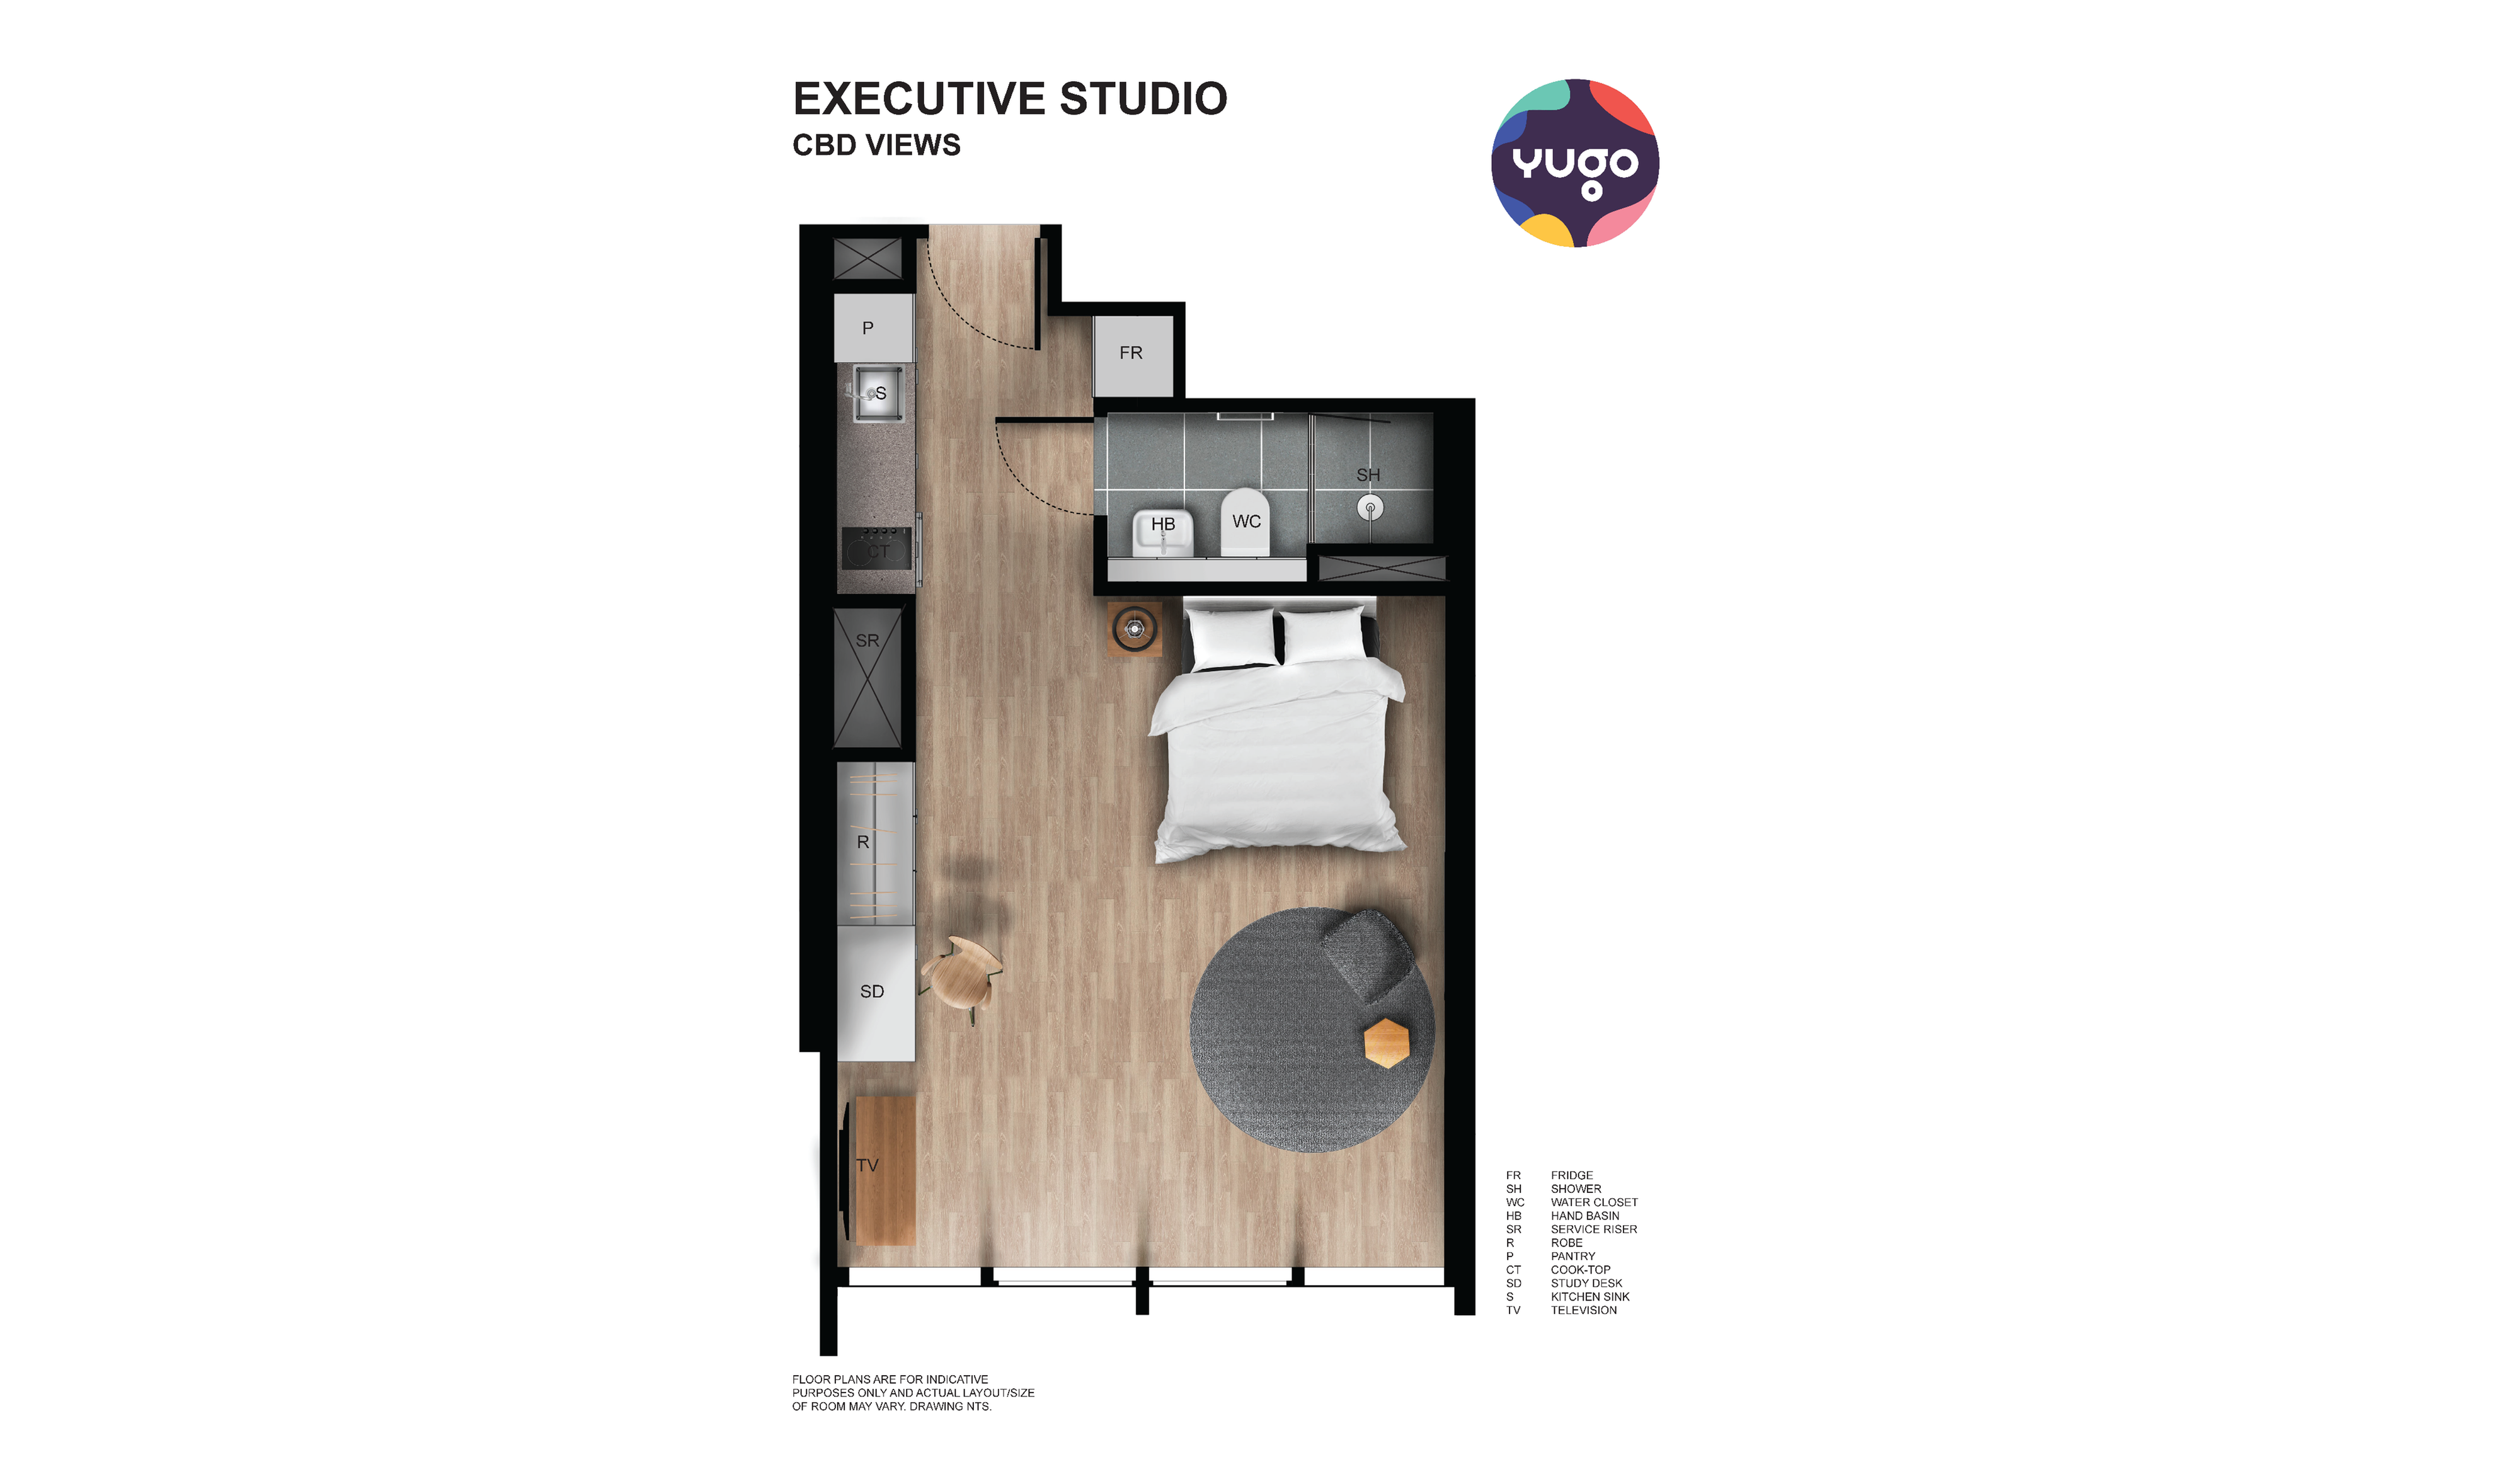 Studio Executive vista CBD (1)